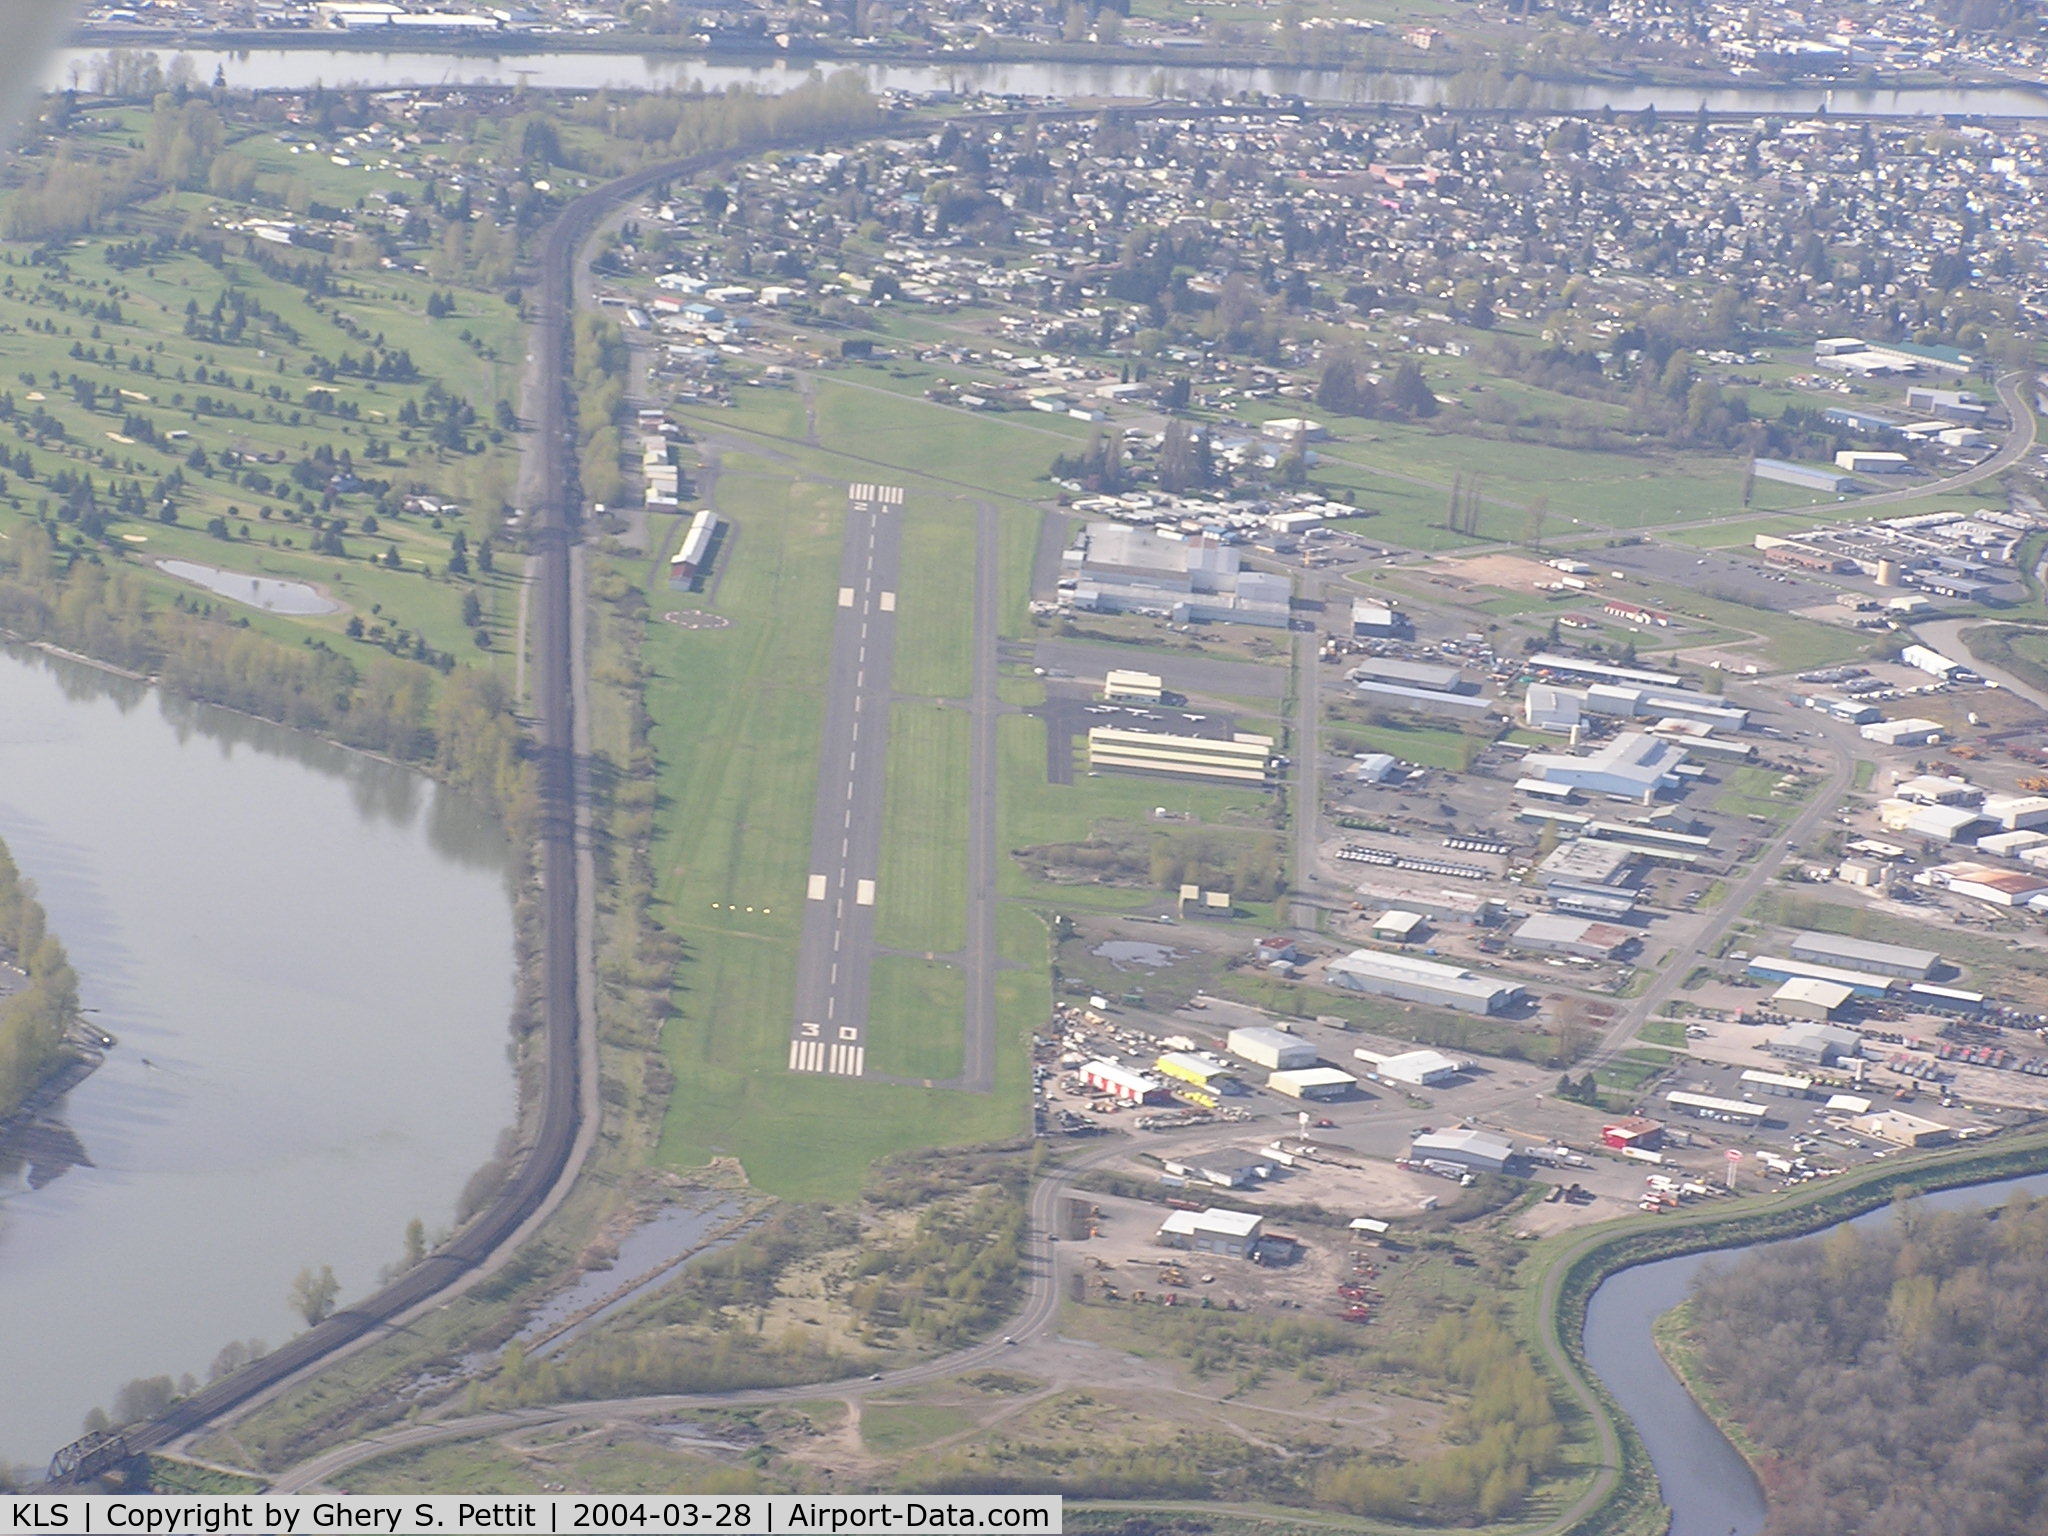 Southwest Washington Regional Airport (KLS) - Kelso-Longview Airport